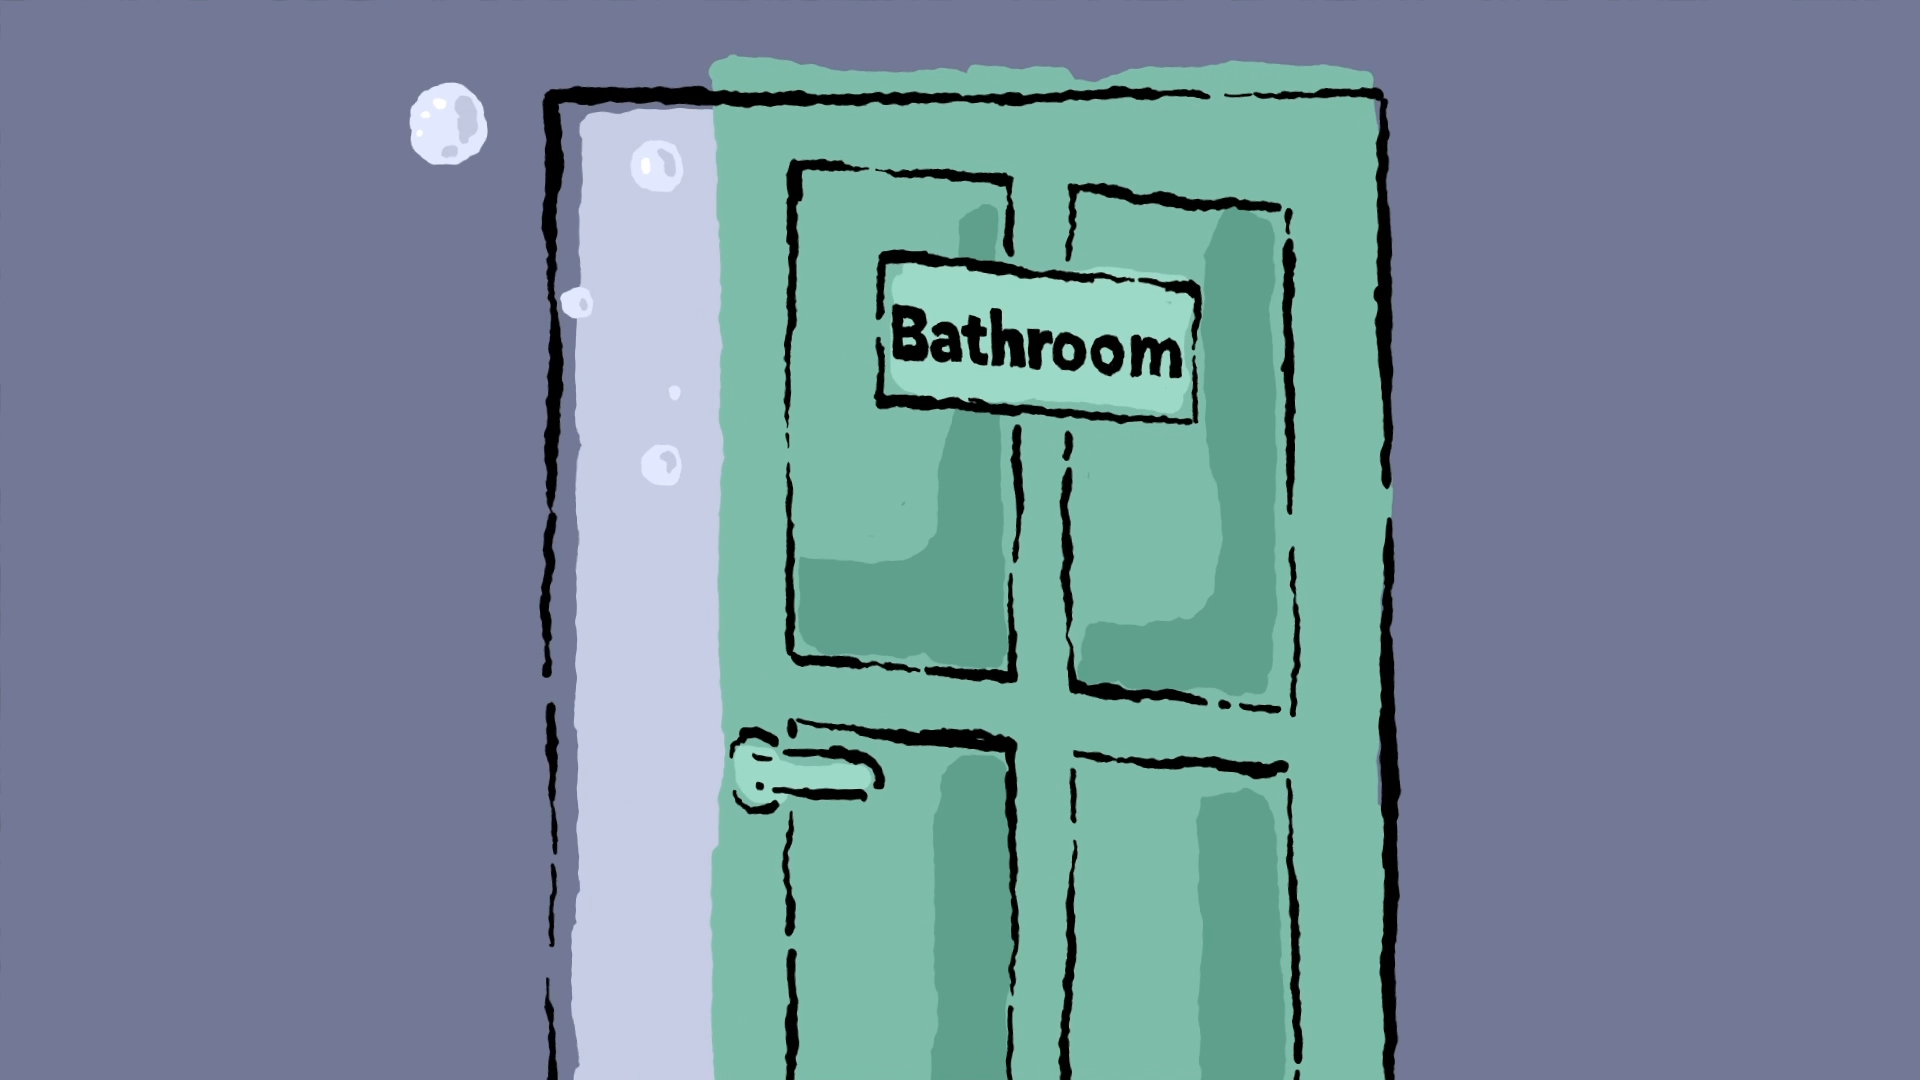 Illustration of a bathroom door